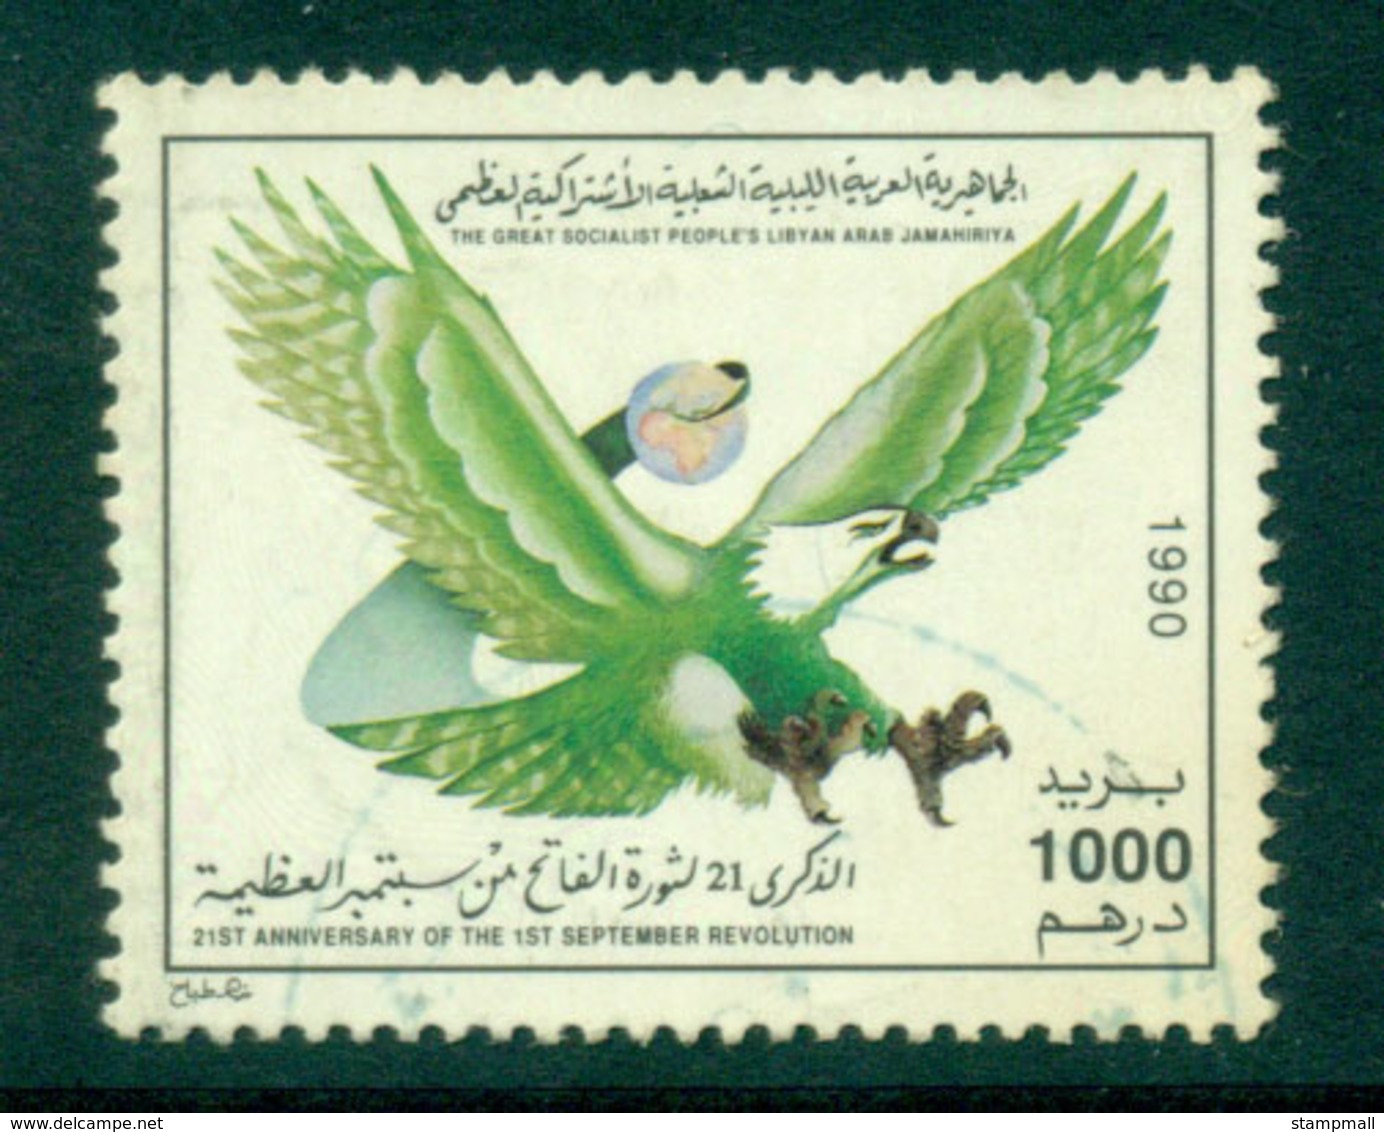 Libya 1990 1000d Bird FU Lot25172 - Libya